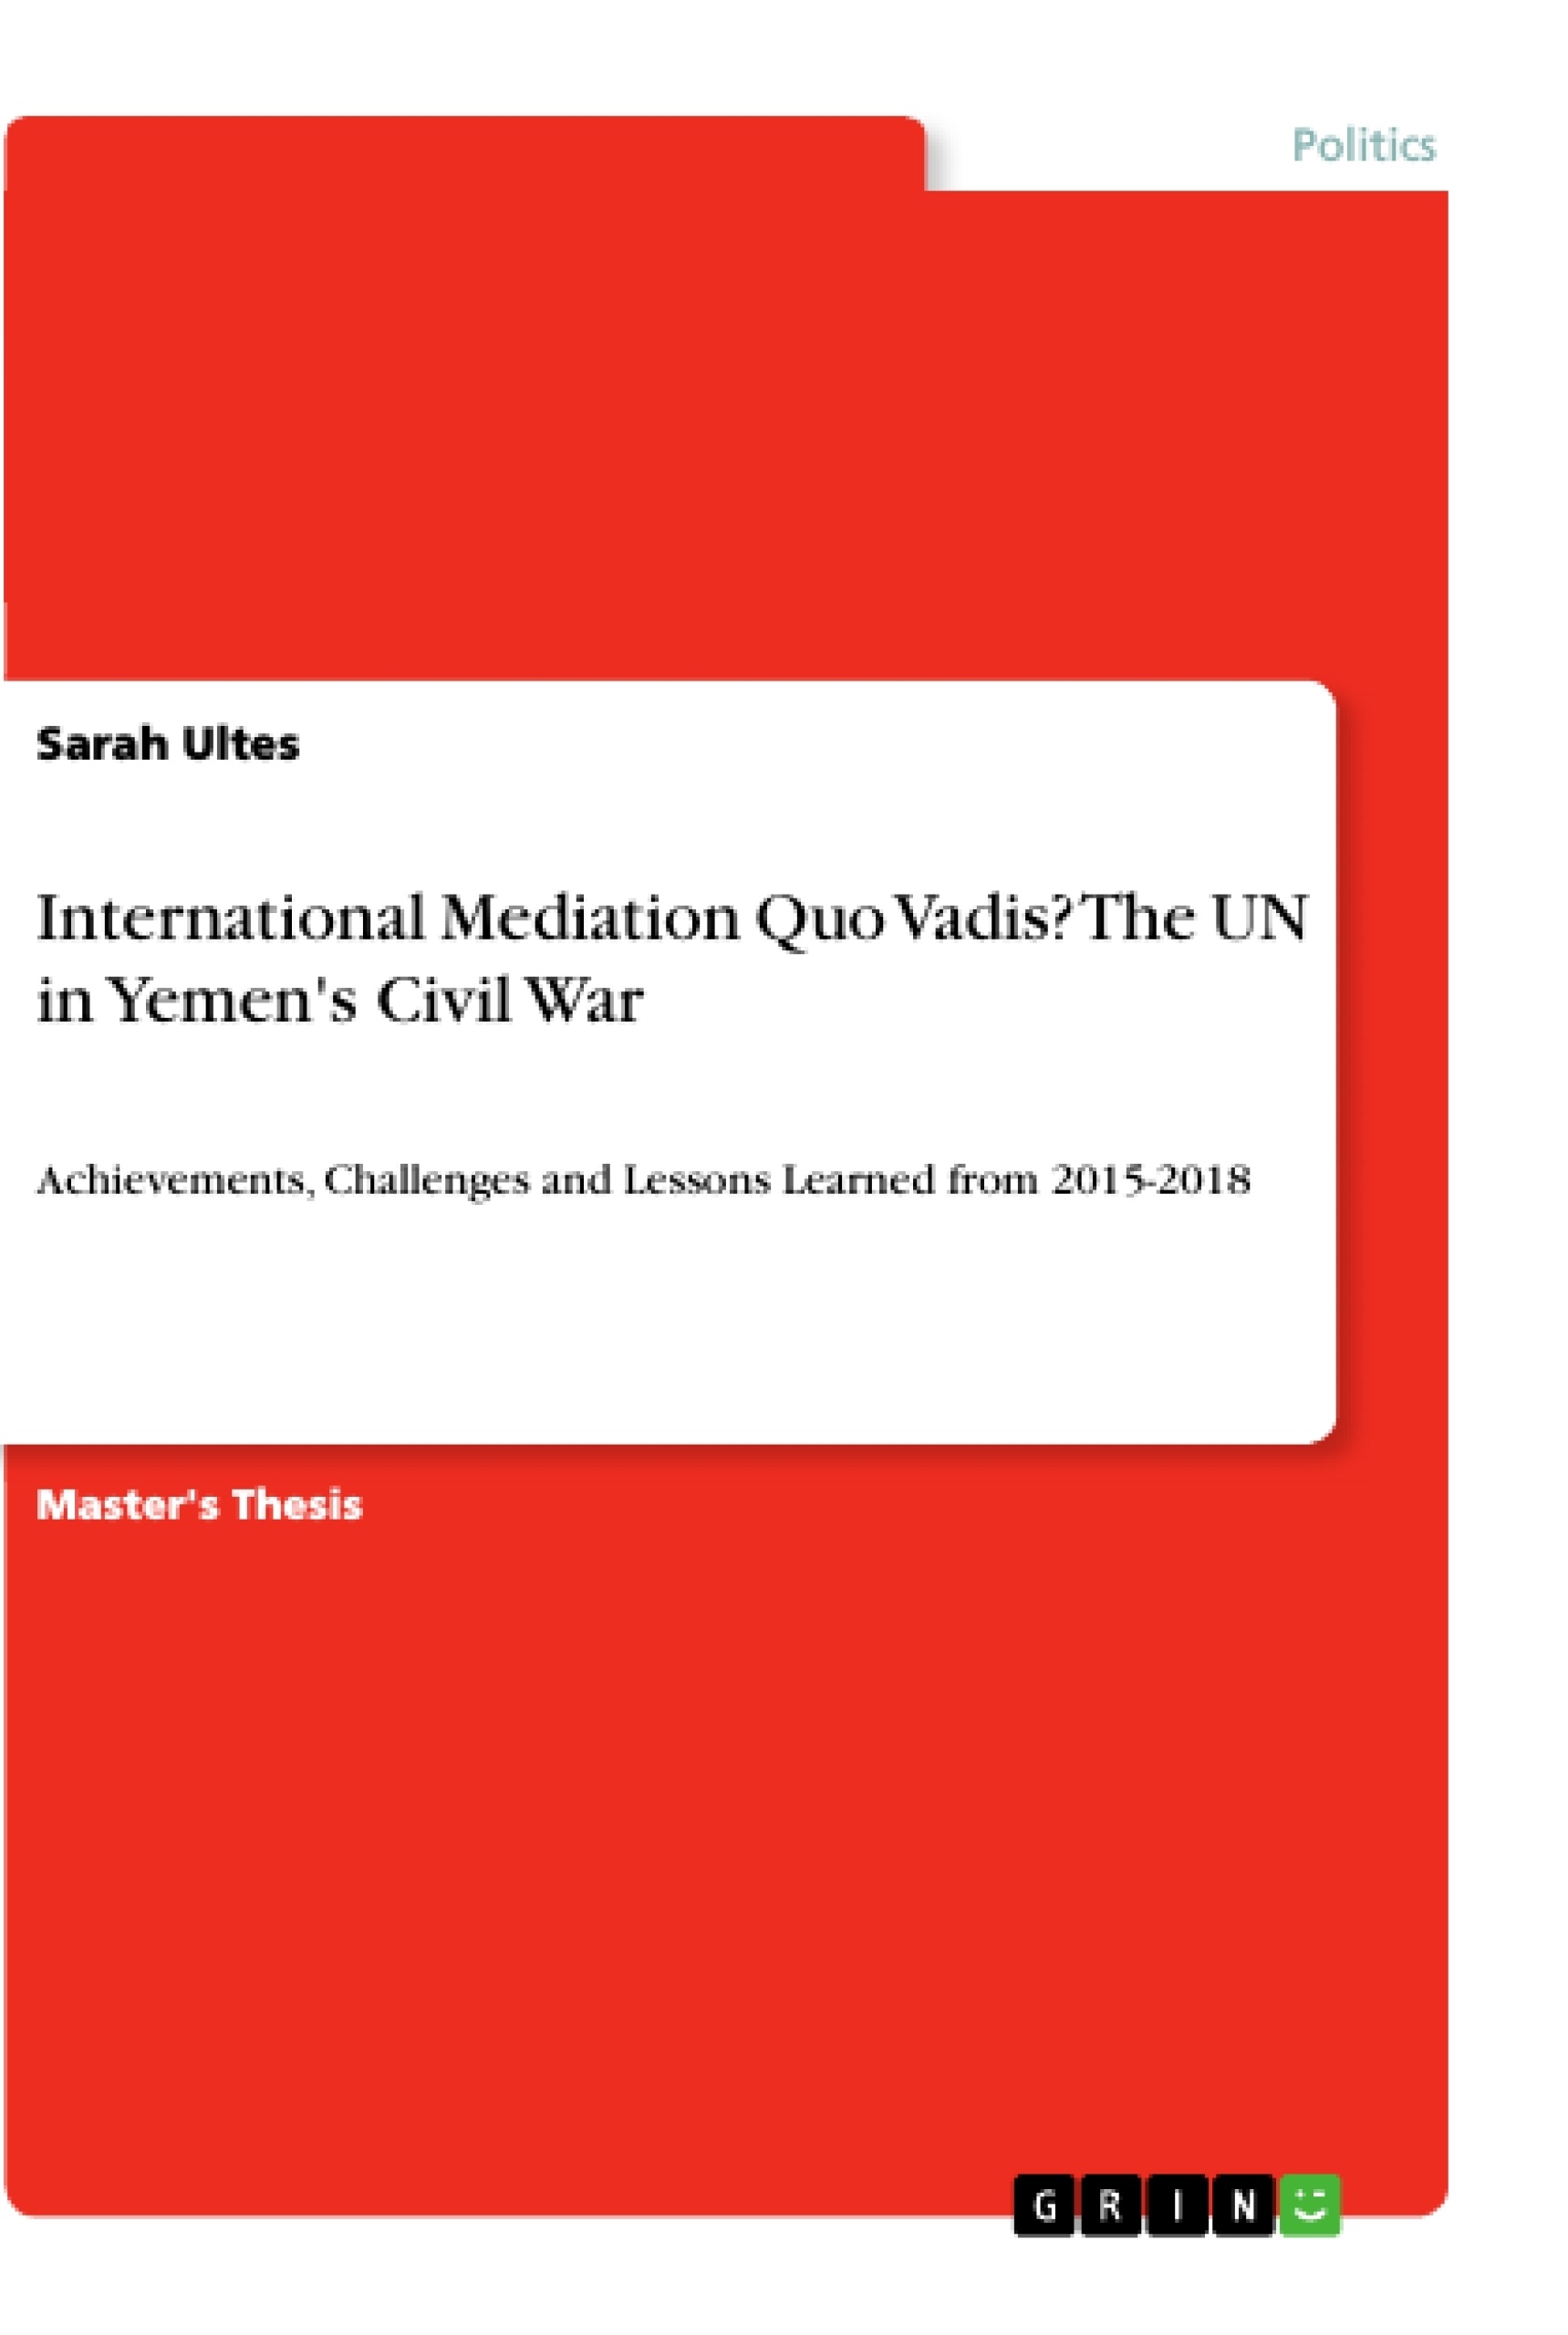 Title: International Mediation Quo Vadis? The UN in Yemen's Civil War